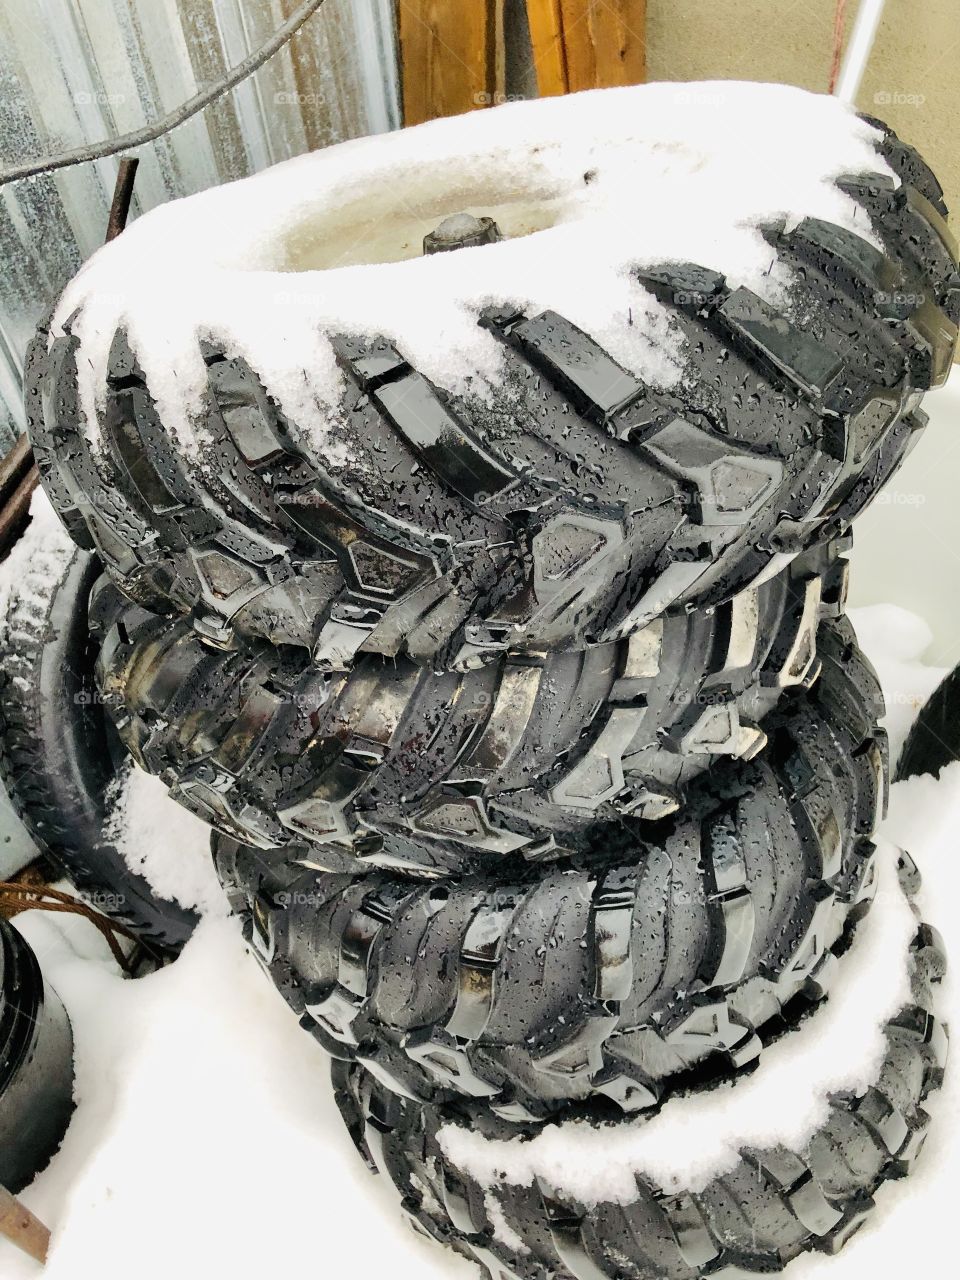 Pile of Tires In Snow-December 02 2018-Terrebonne, Quebec, Canada